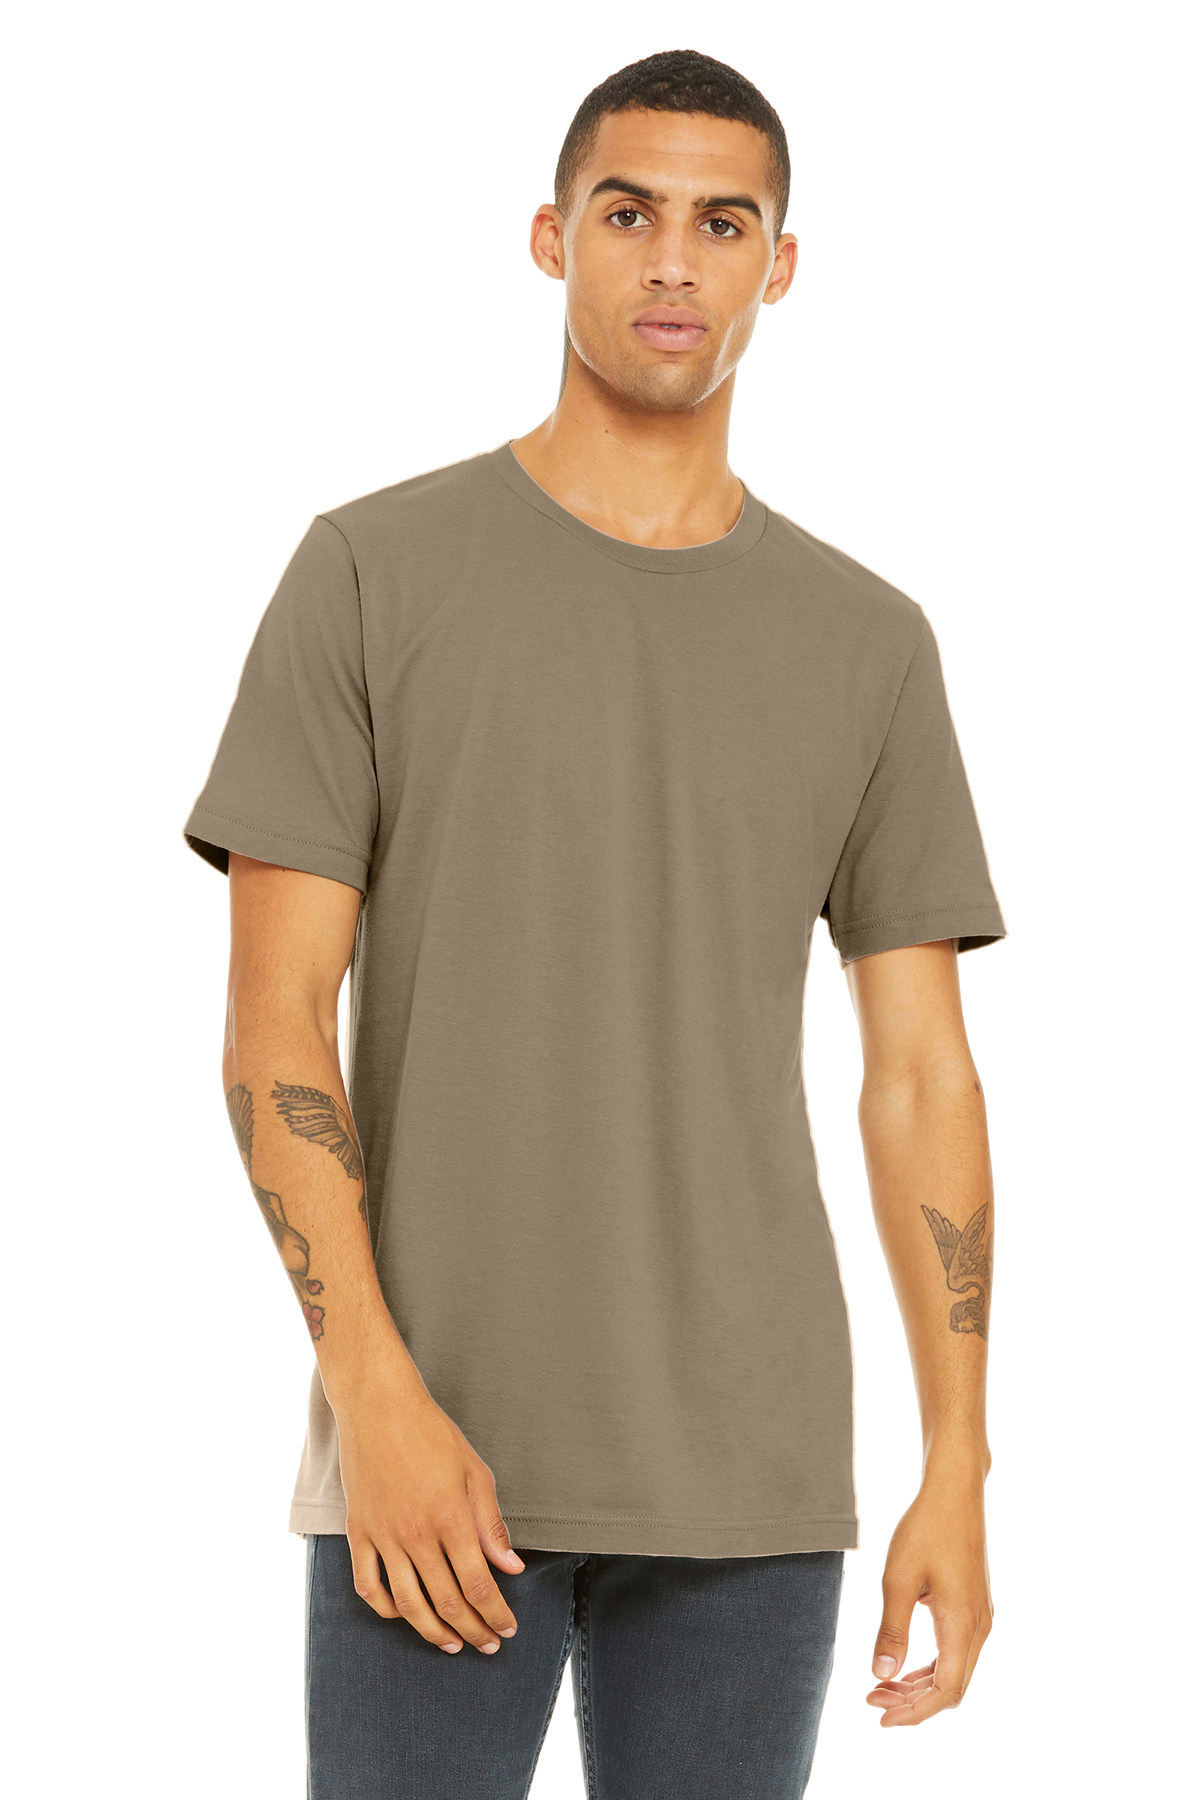 Bella+Canvas Embroidered Men's Ringspun Cotton T-Shirt - Queensboro